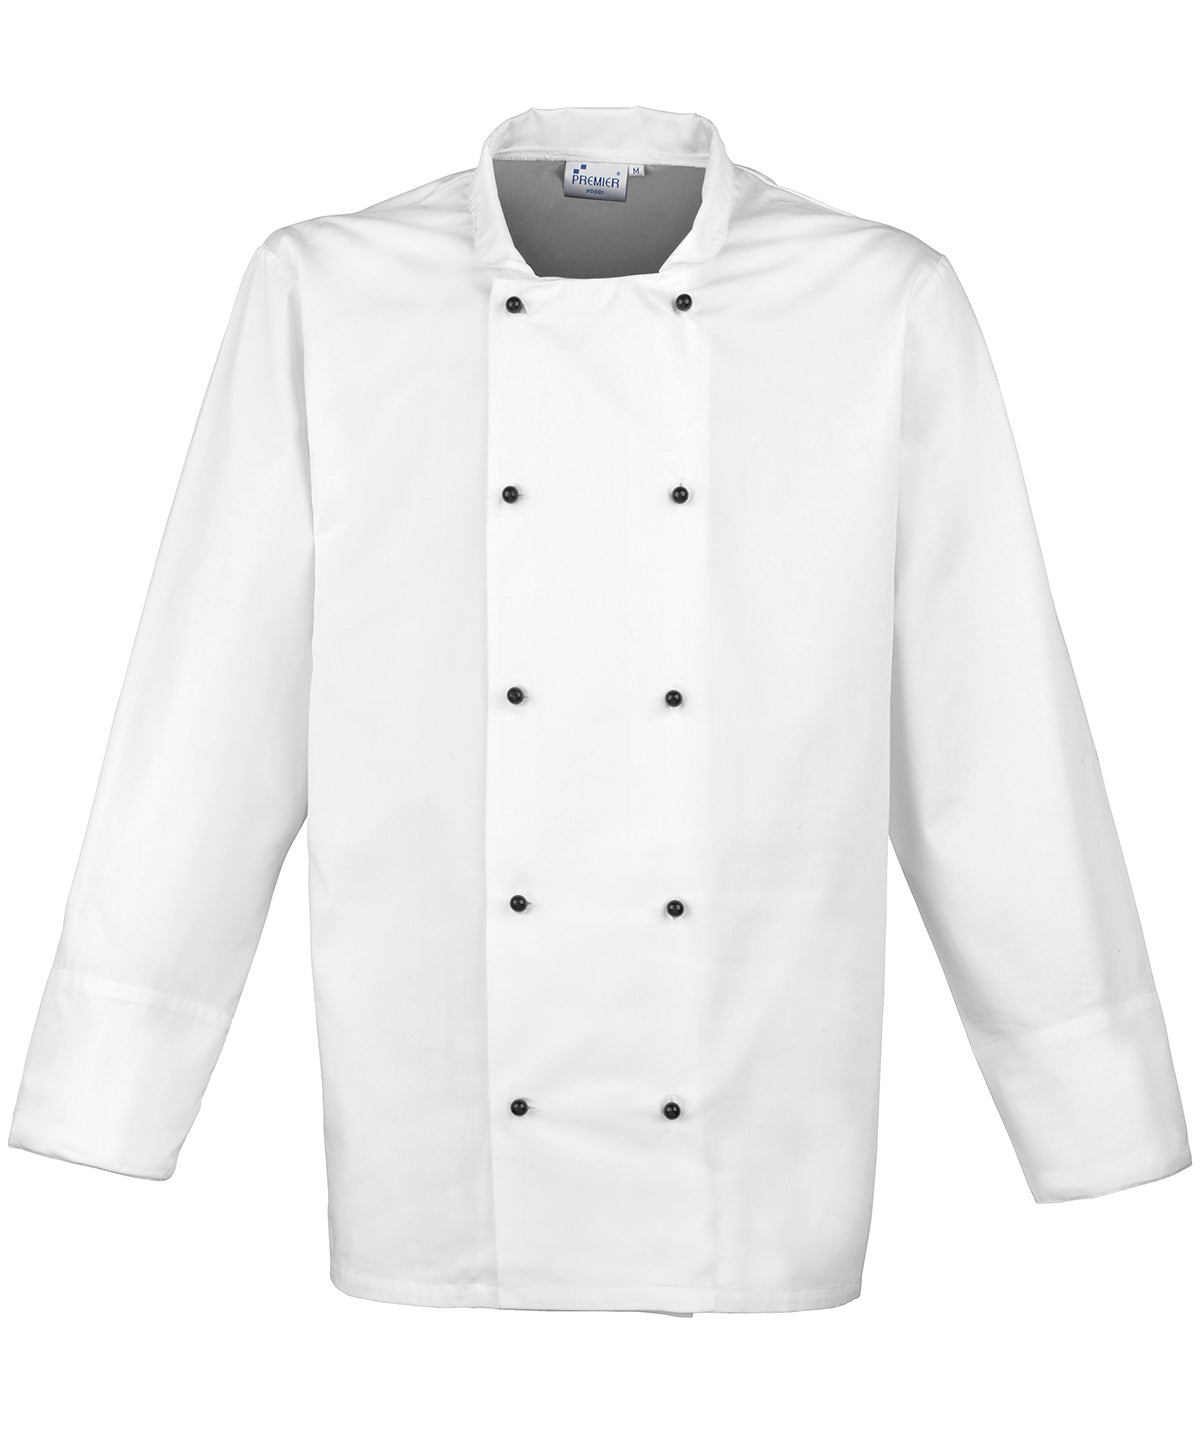 Kokkajakkar - Cuisine Long Sleeve Chef's Jacket